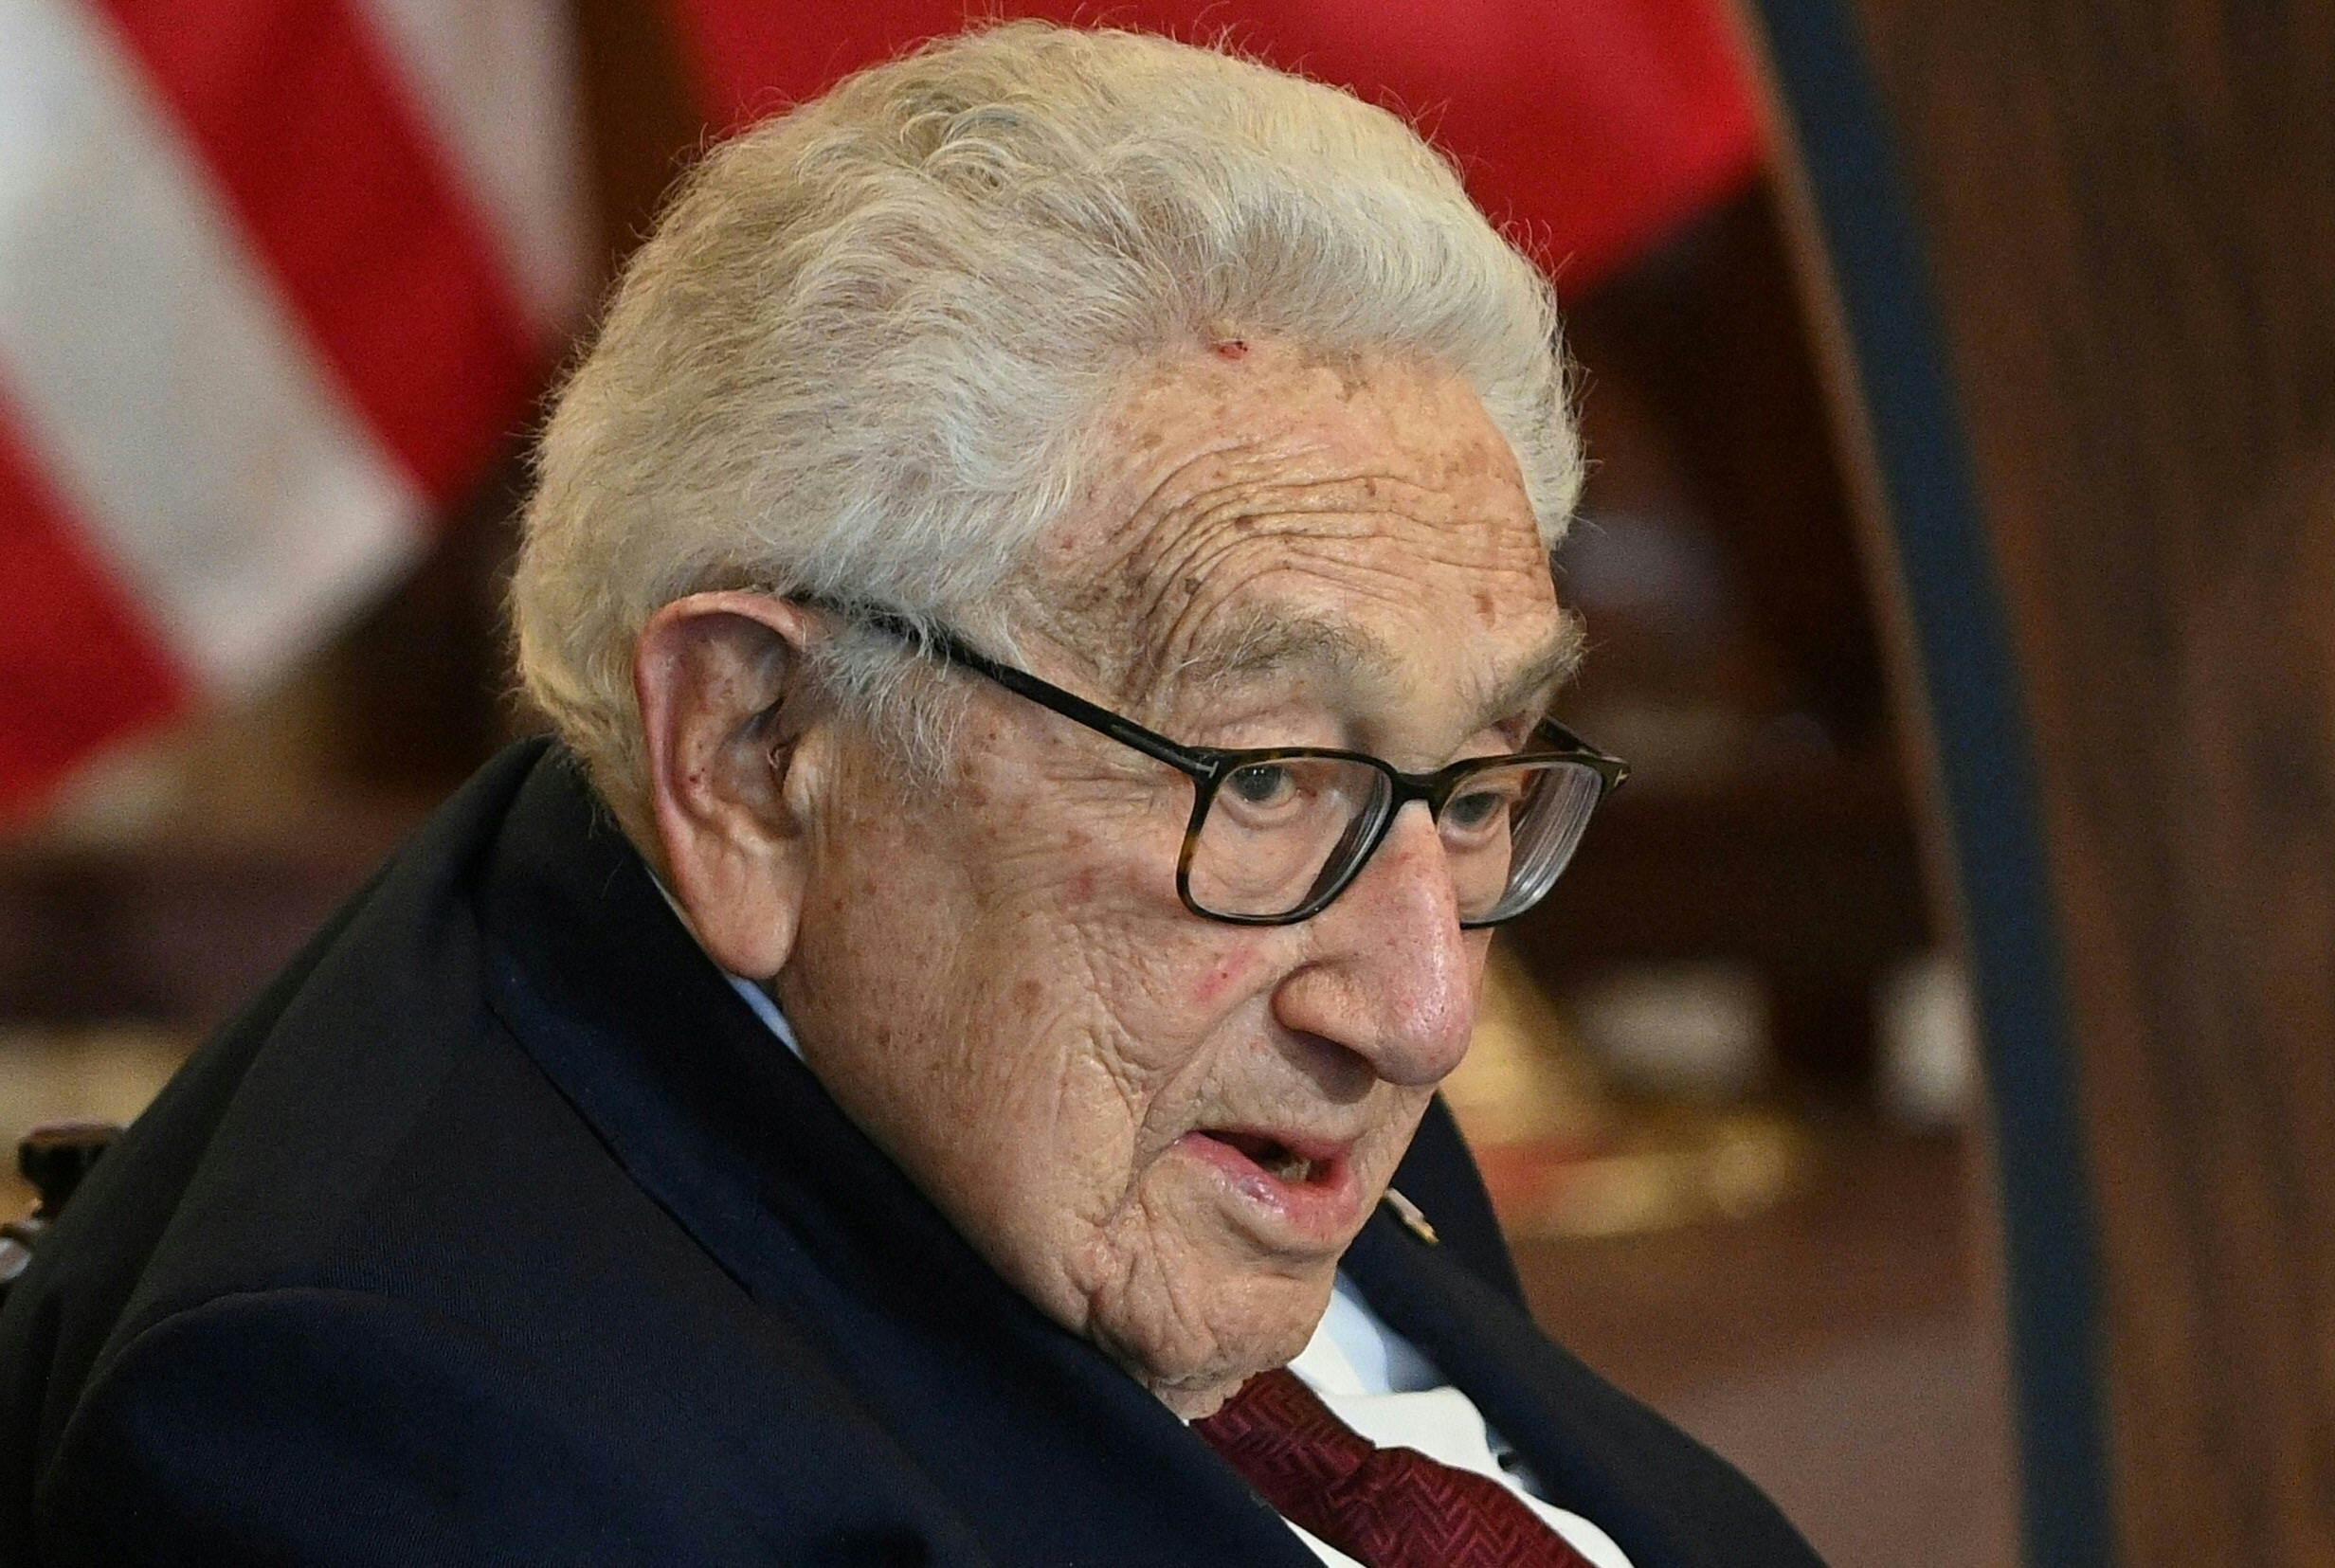 Antony Blinken and Samantha Power party with Henry Kissinger